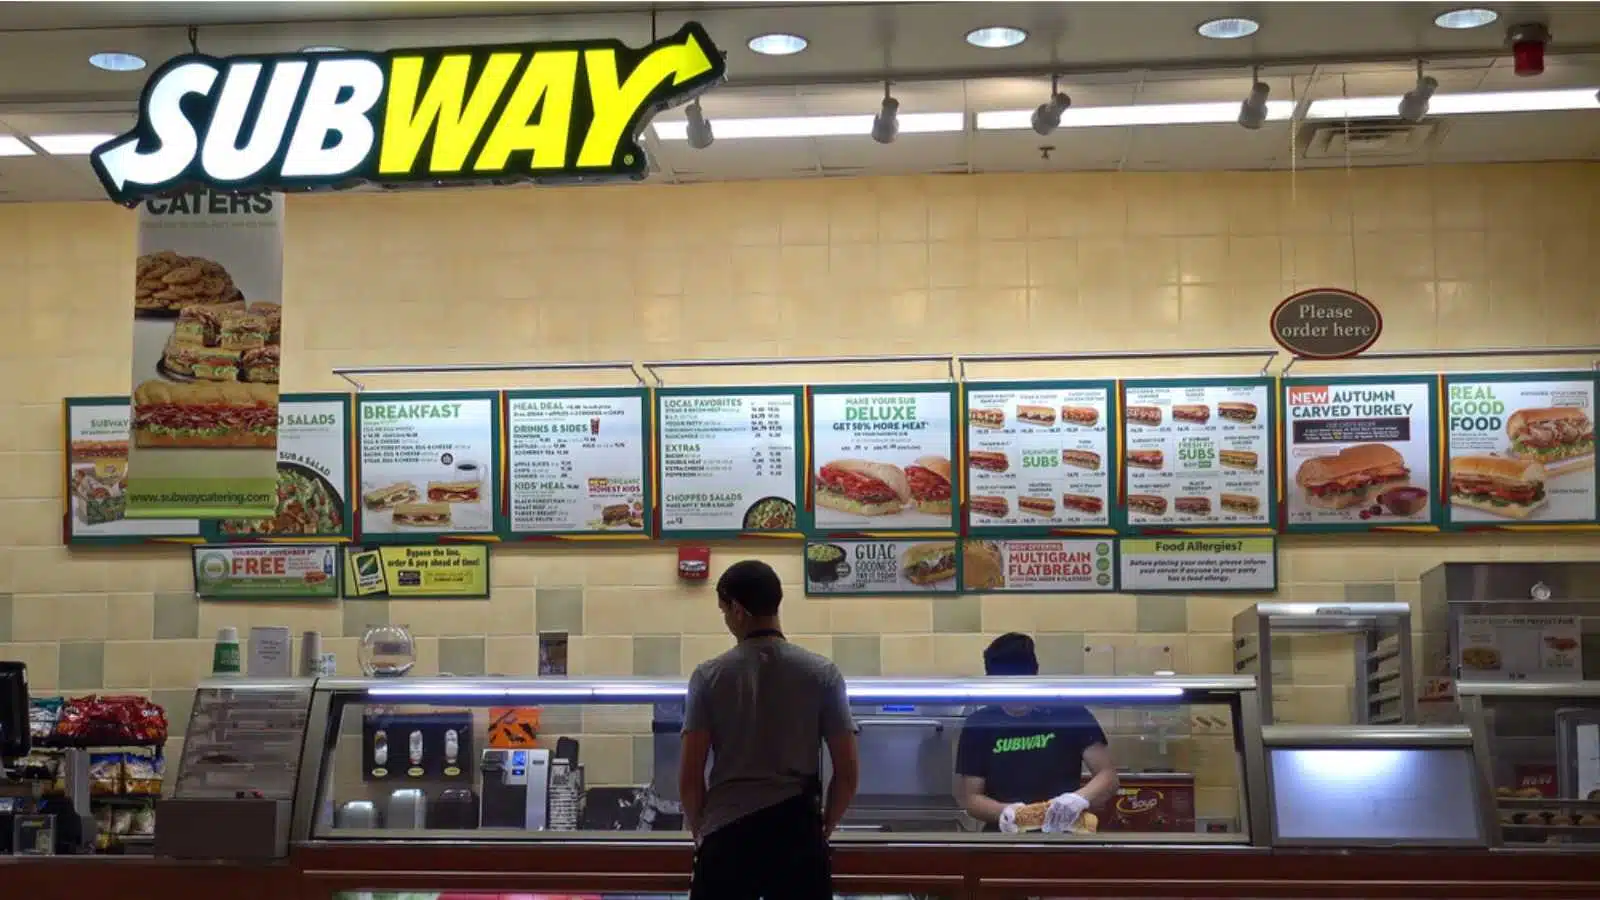 Subway sandwiches menu counter, made to order customer, shopping mall food court, Saugus, Massachusetts USA - November 9, 2016